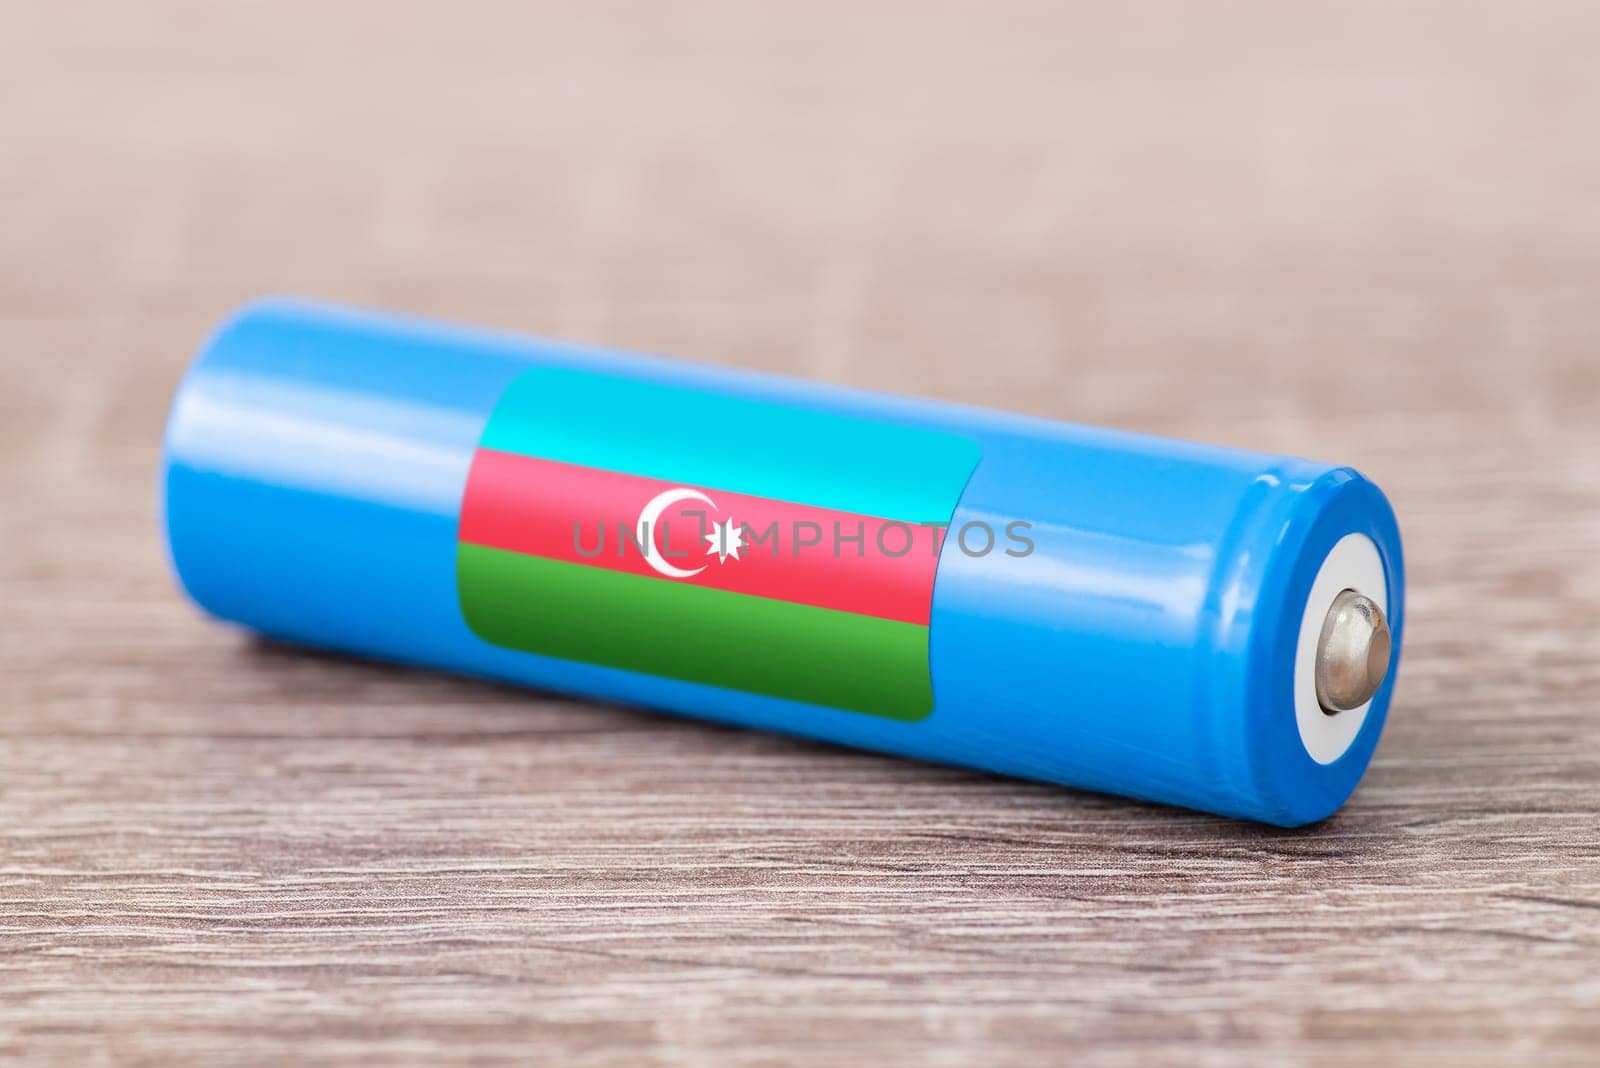 Rechargeable li-ion battery with flag of Azerbaijan by VitaliiPetrushenko